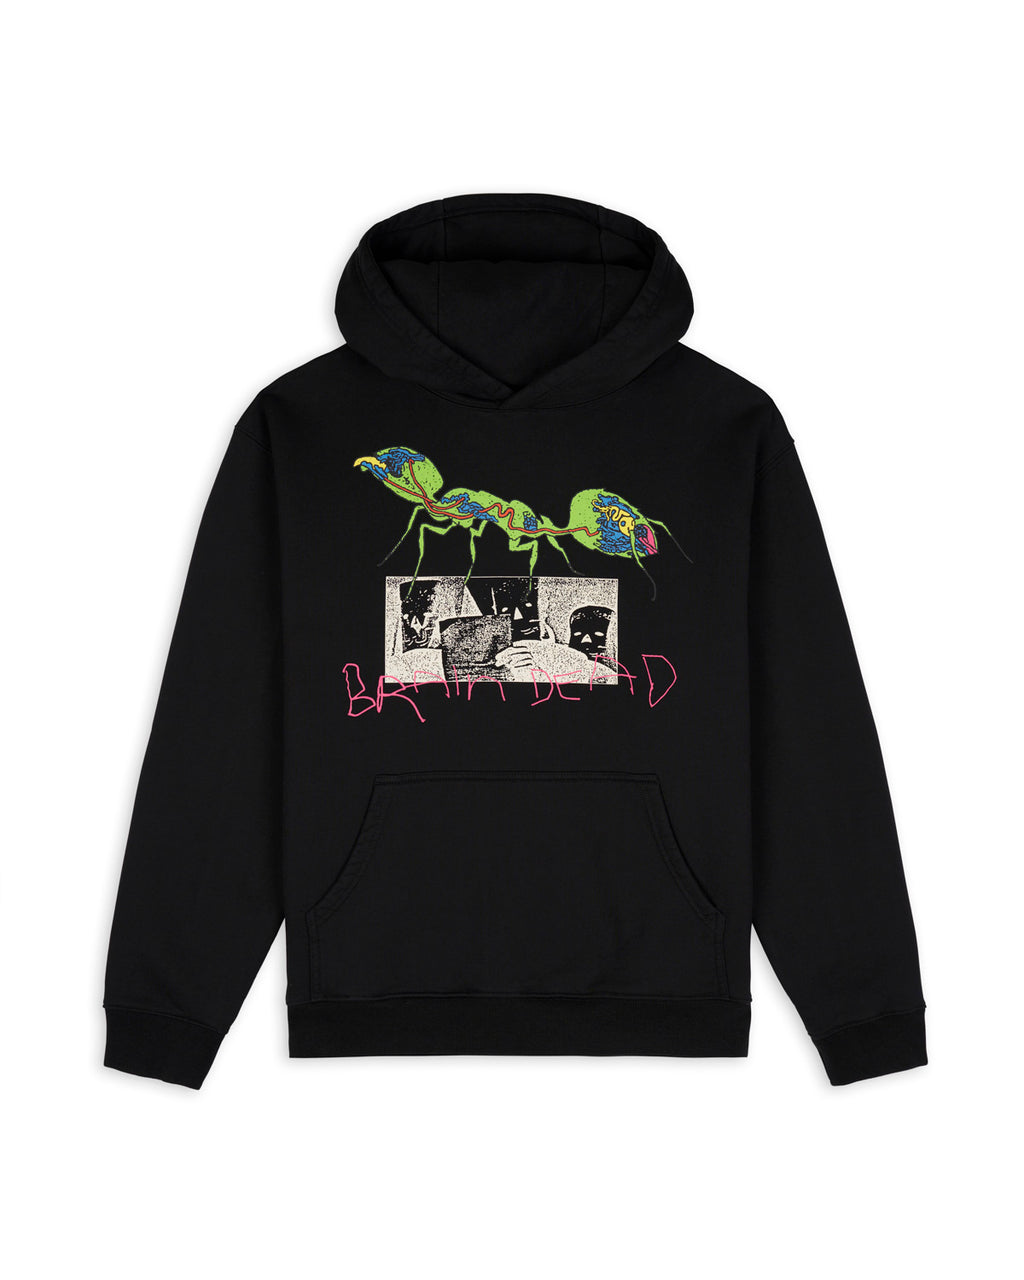 Ant War Hooded Sweatshirt - Black 1